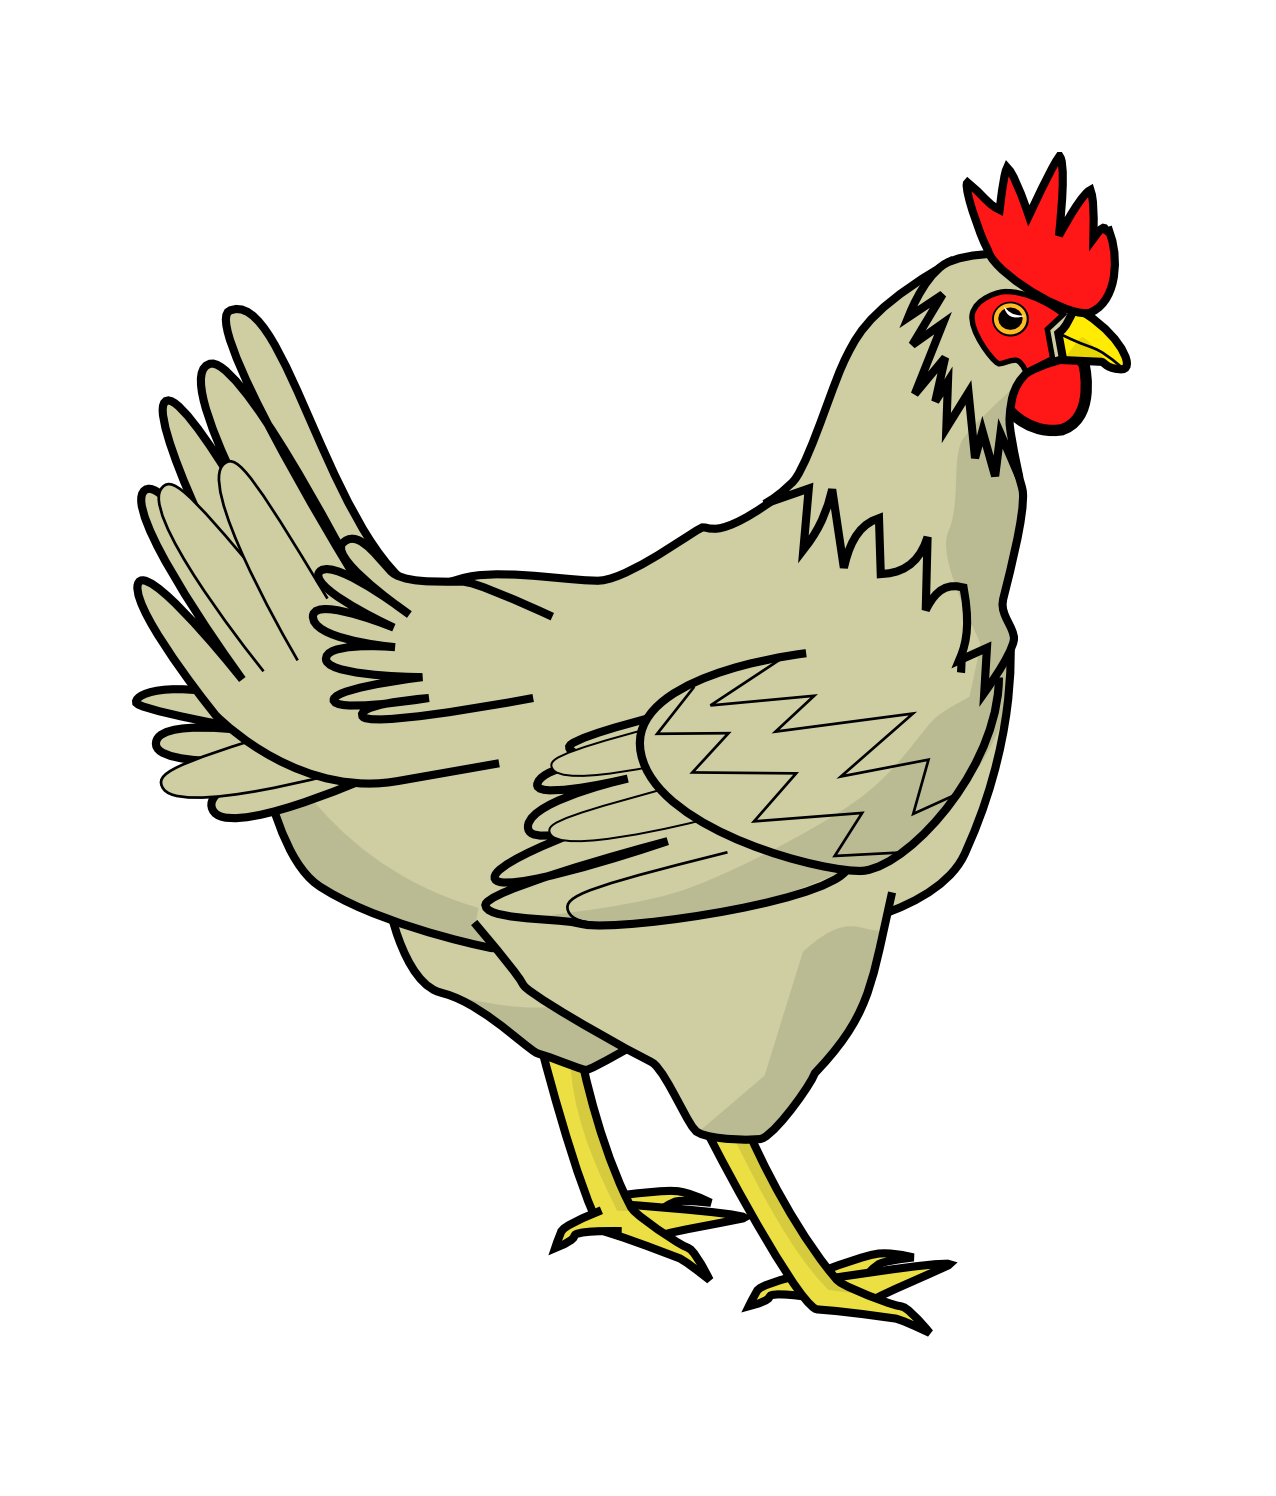 chicken image clipart